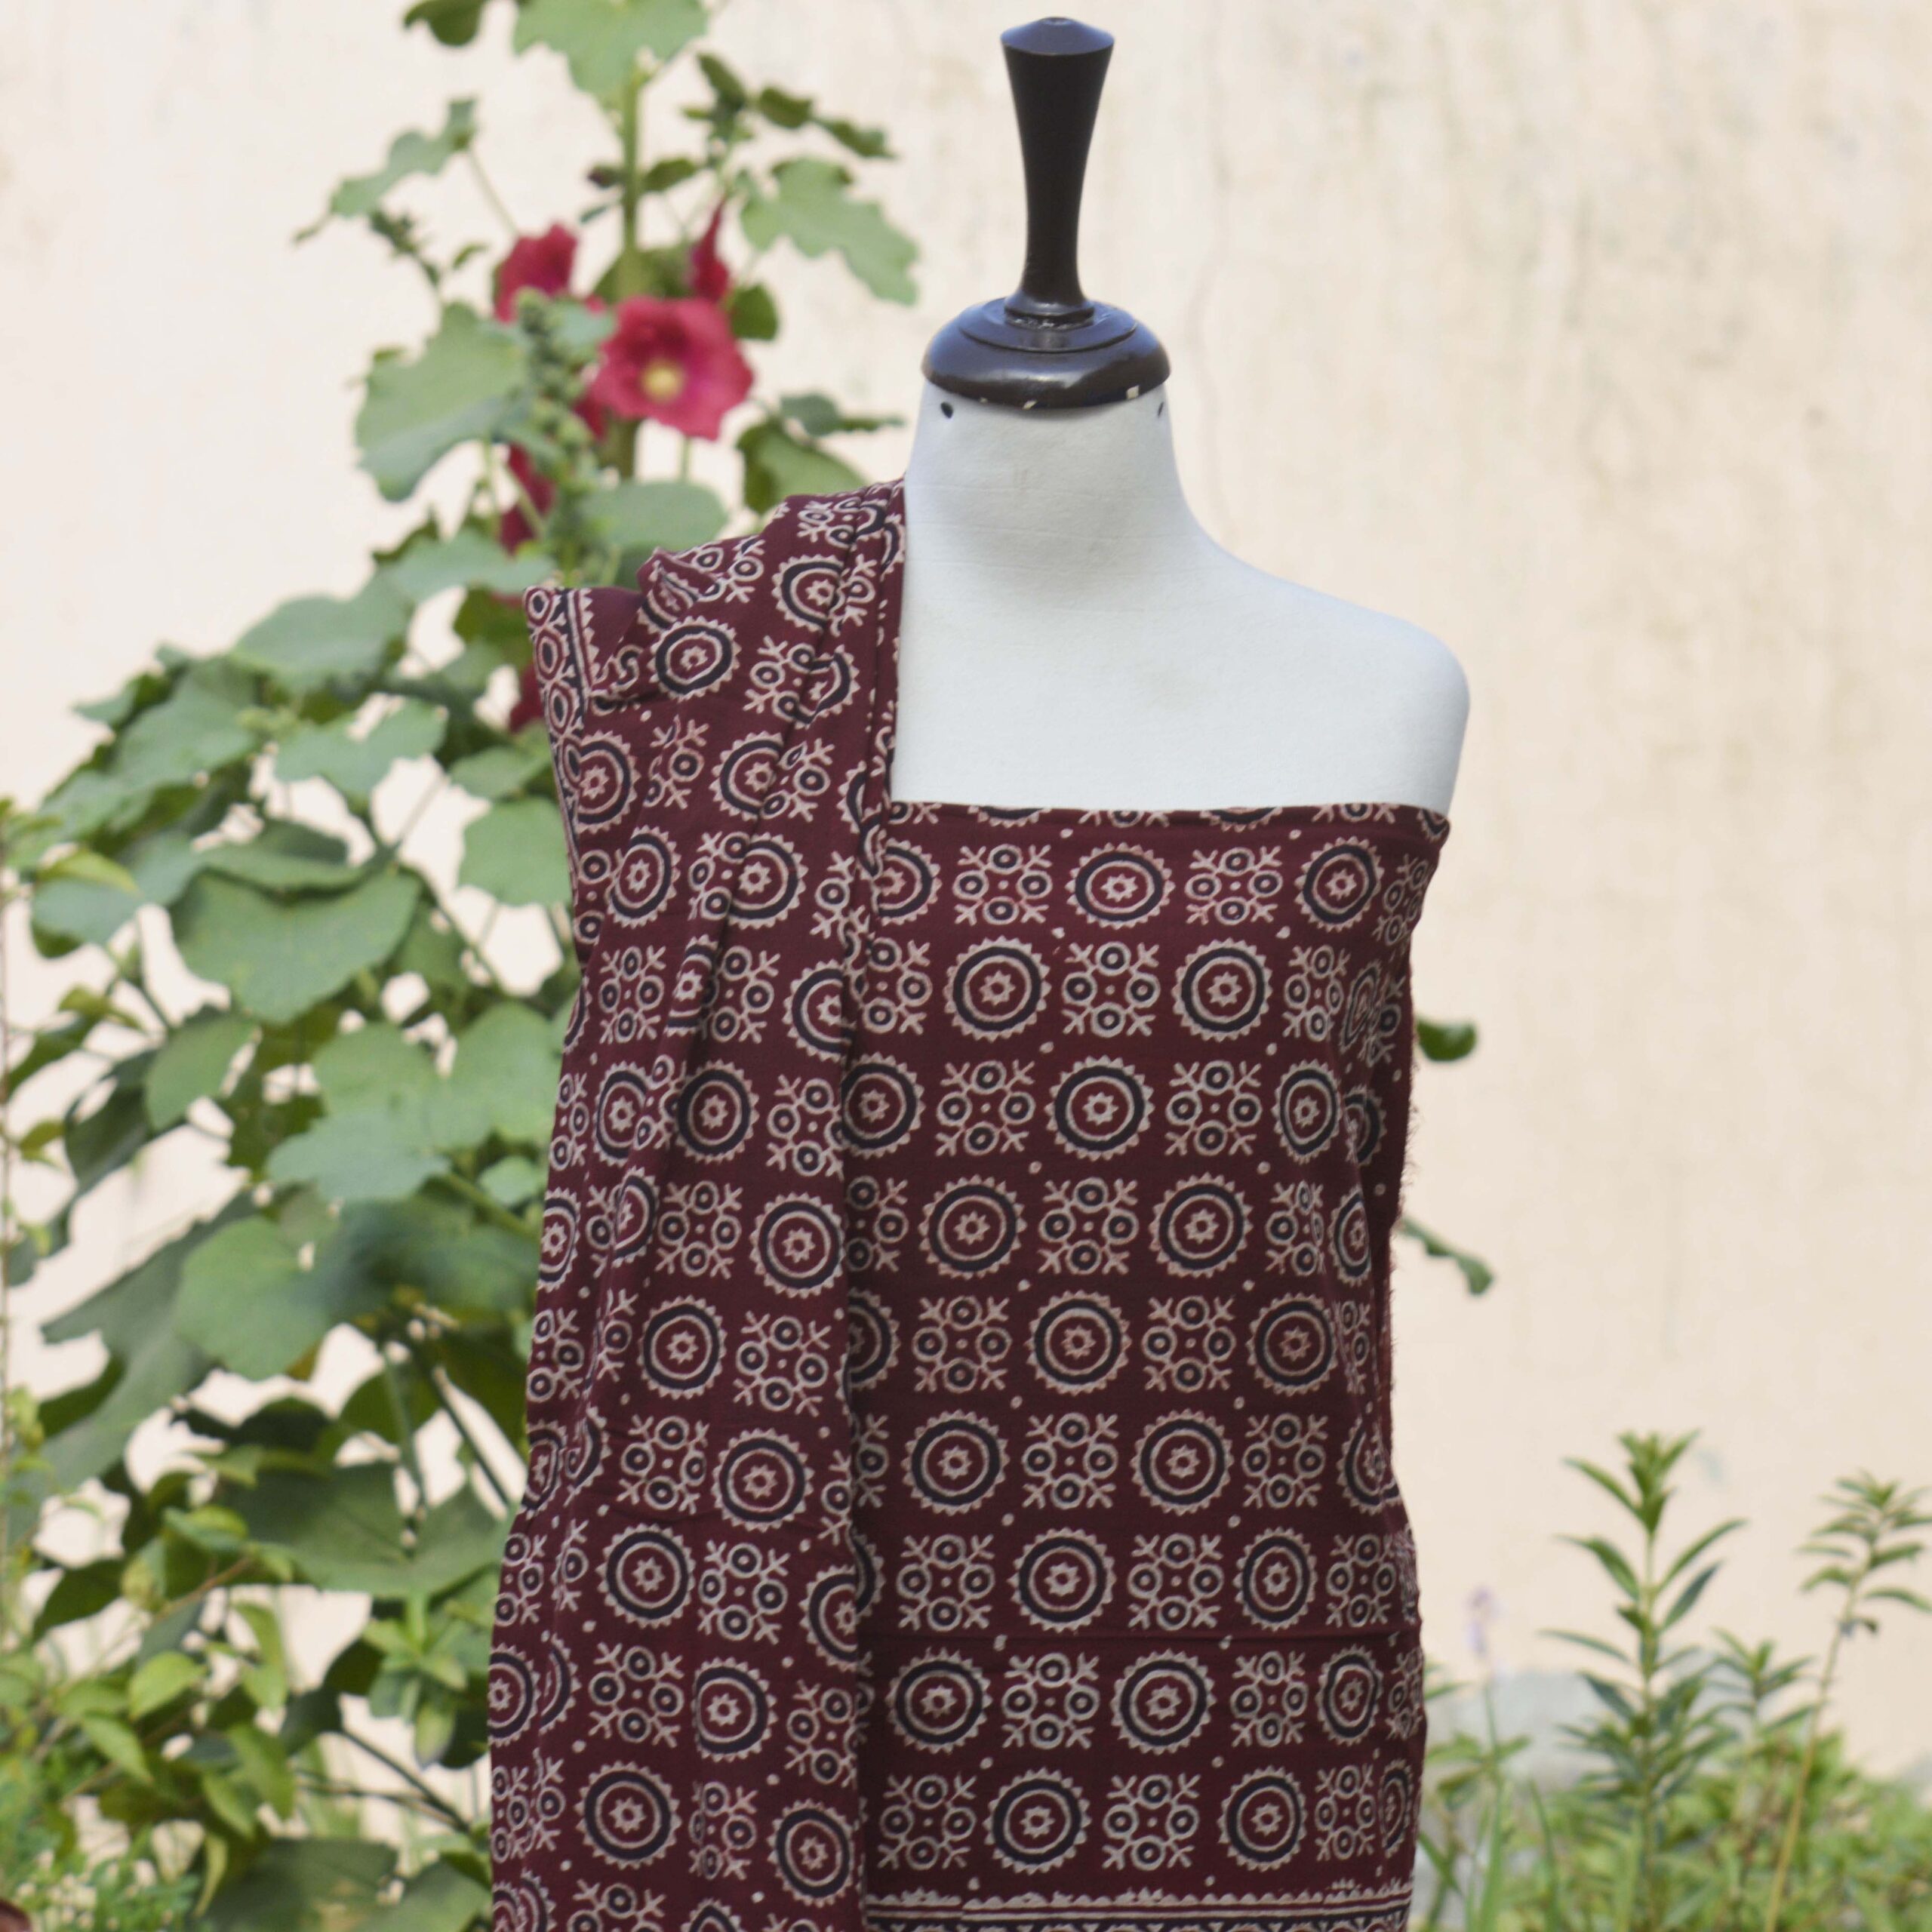 Handmade Dye Block Print available

limited stock order now dm us or visit our website link in bio

.
#Handmade #EmbroideryArt #Sartiyoon #CulturalHeritage #khalidkori #beautyofmaturaldye #Restocked #HandmadeTradition #handcraft #Sale #sartyoon #lahore #textile #reelsinsta #reel #reelsvideos #SartiyoonArtisans #sindhi #karachi #lahore #islamabad #blockprinting #scarves #handcrafted #artisans #textiles #style #handmade #craftsmanship